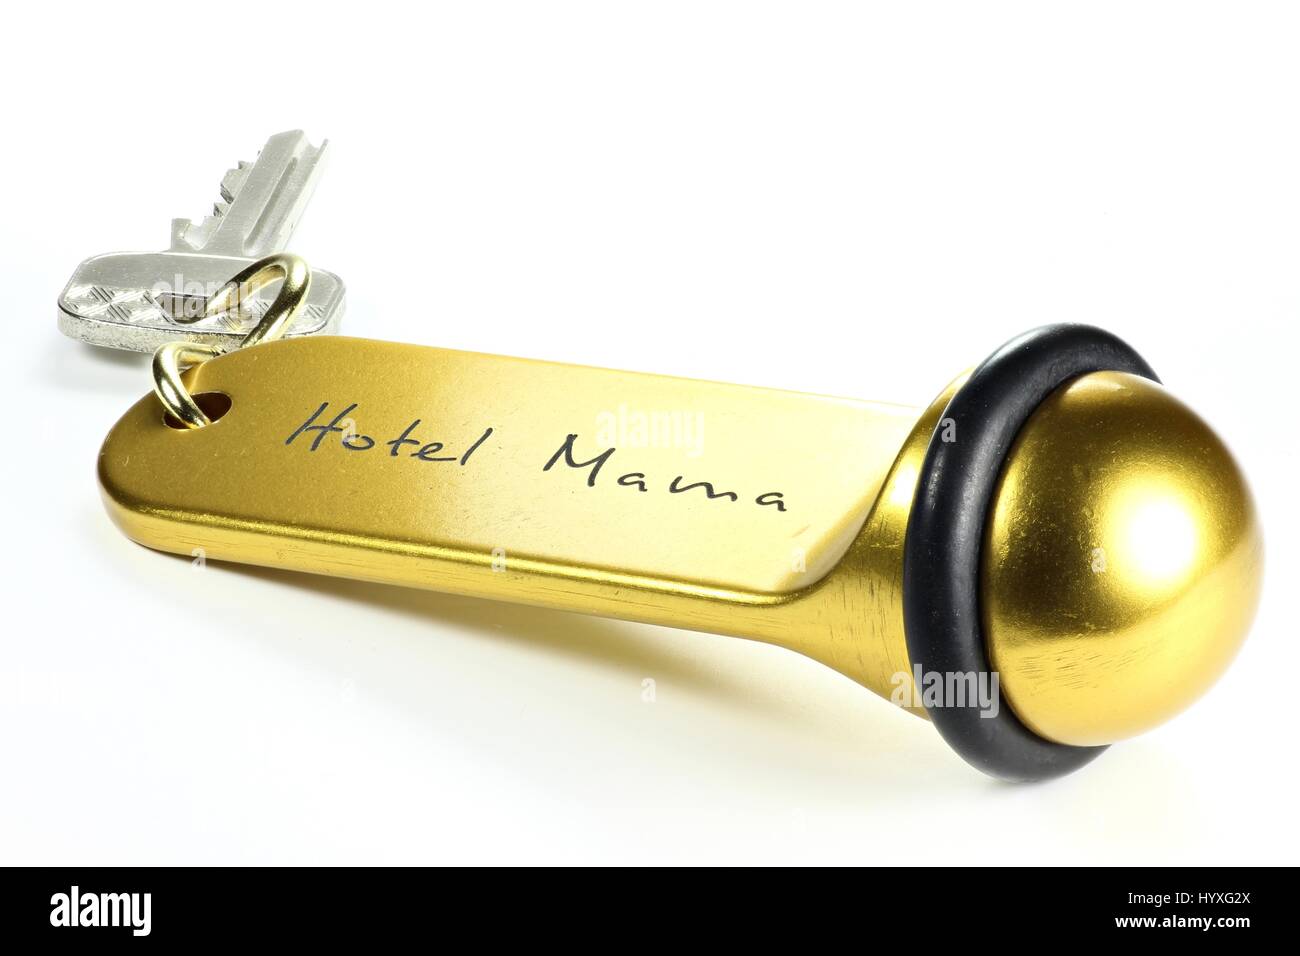 Hotel Mama - hotel key isolati su sfondo bianco Foto Stock